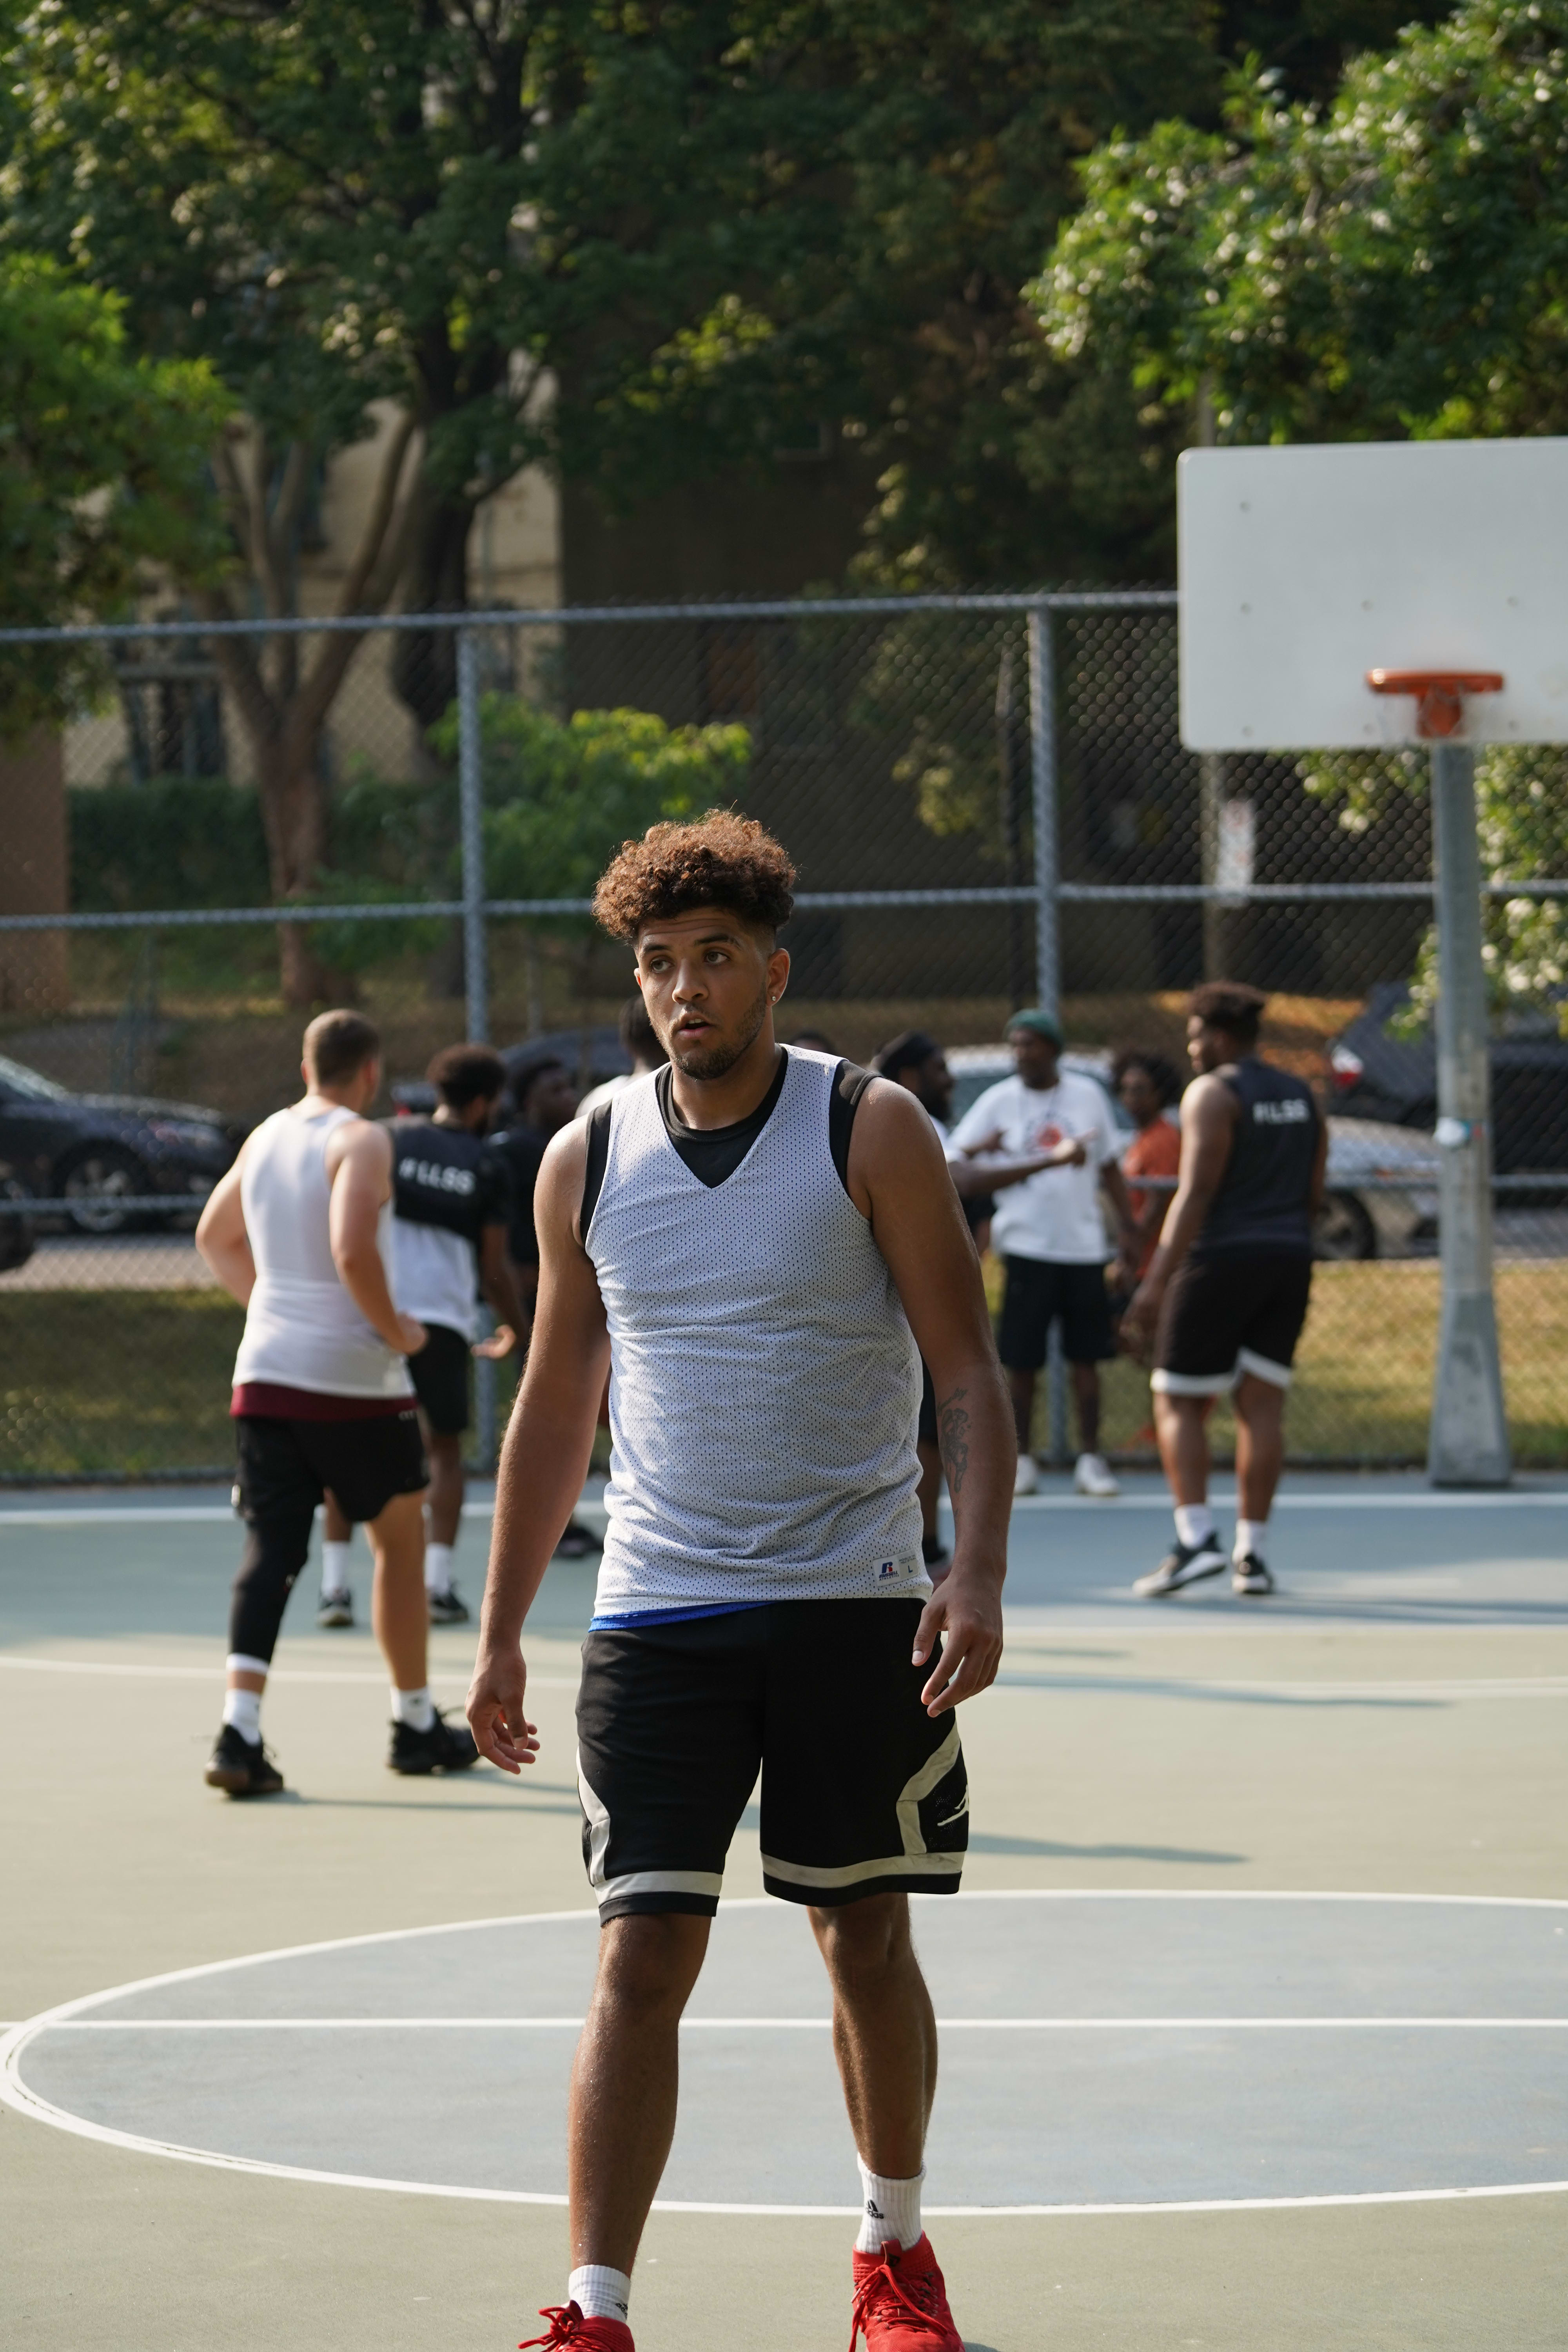 A basketball player walking